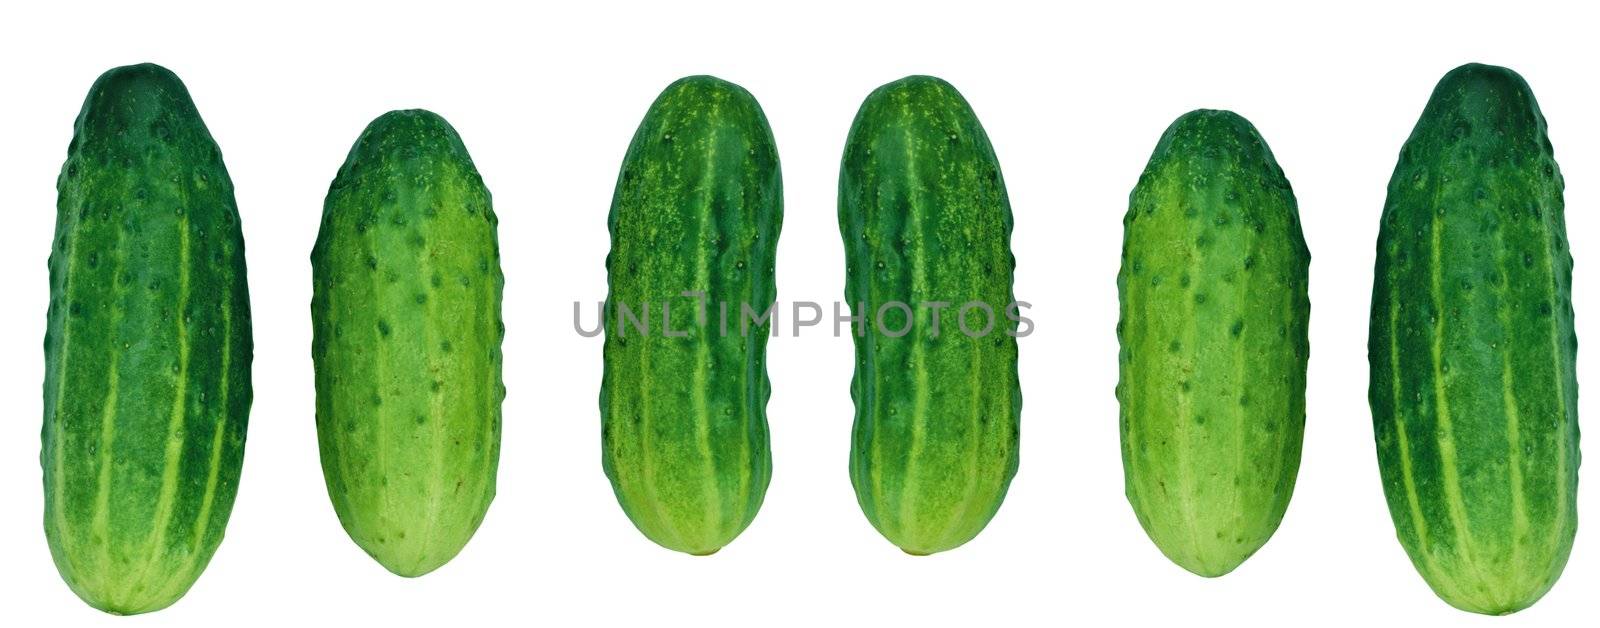 Cucumber on White Background